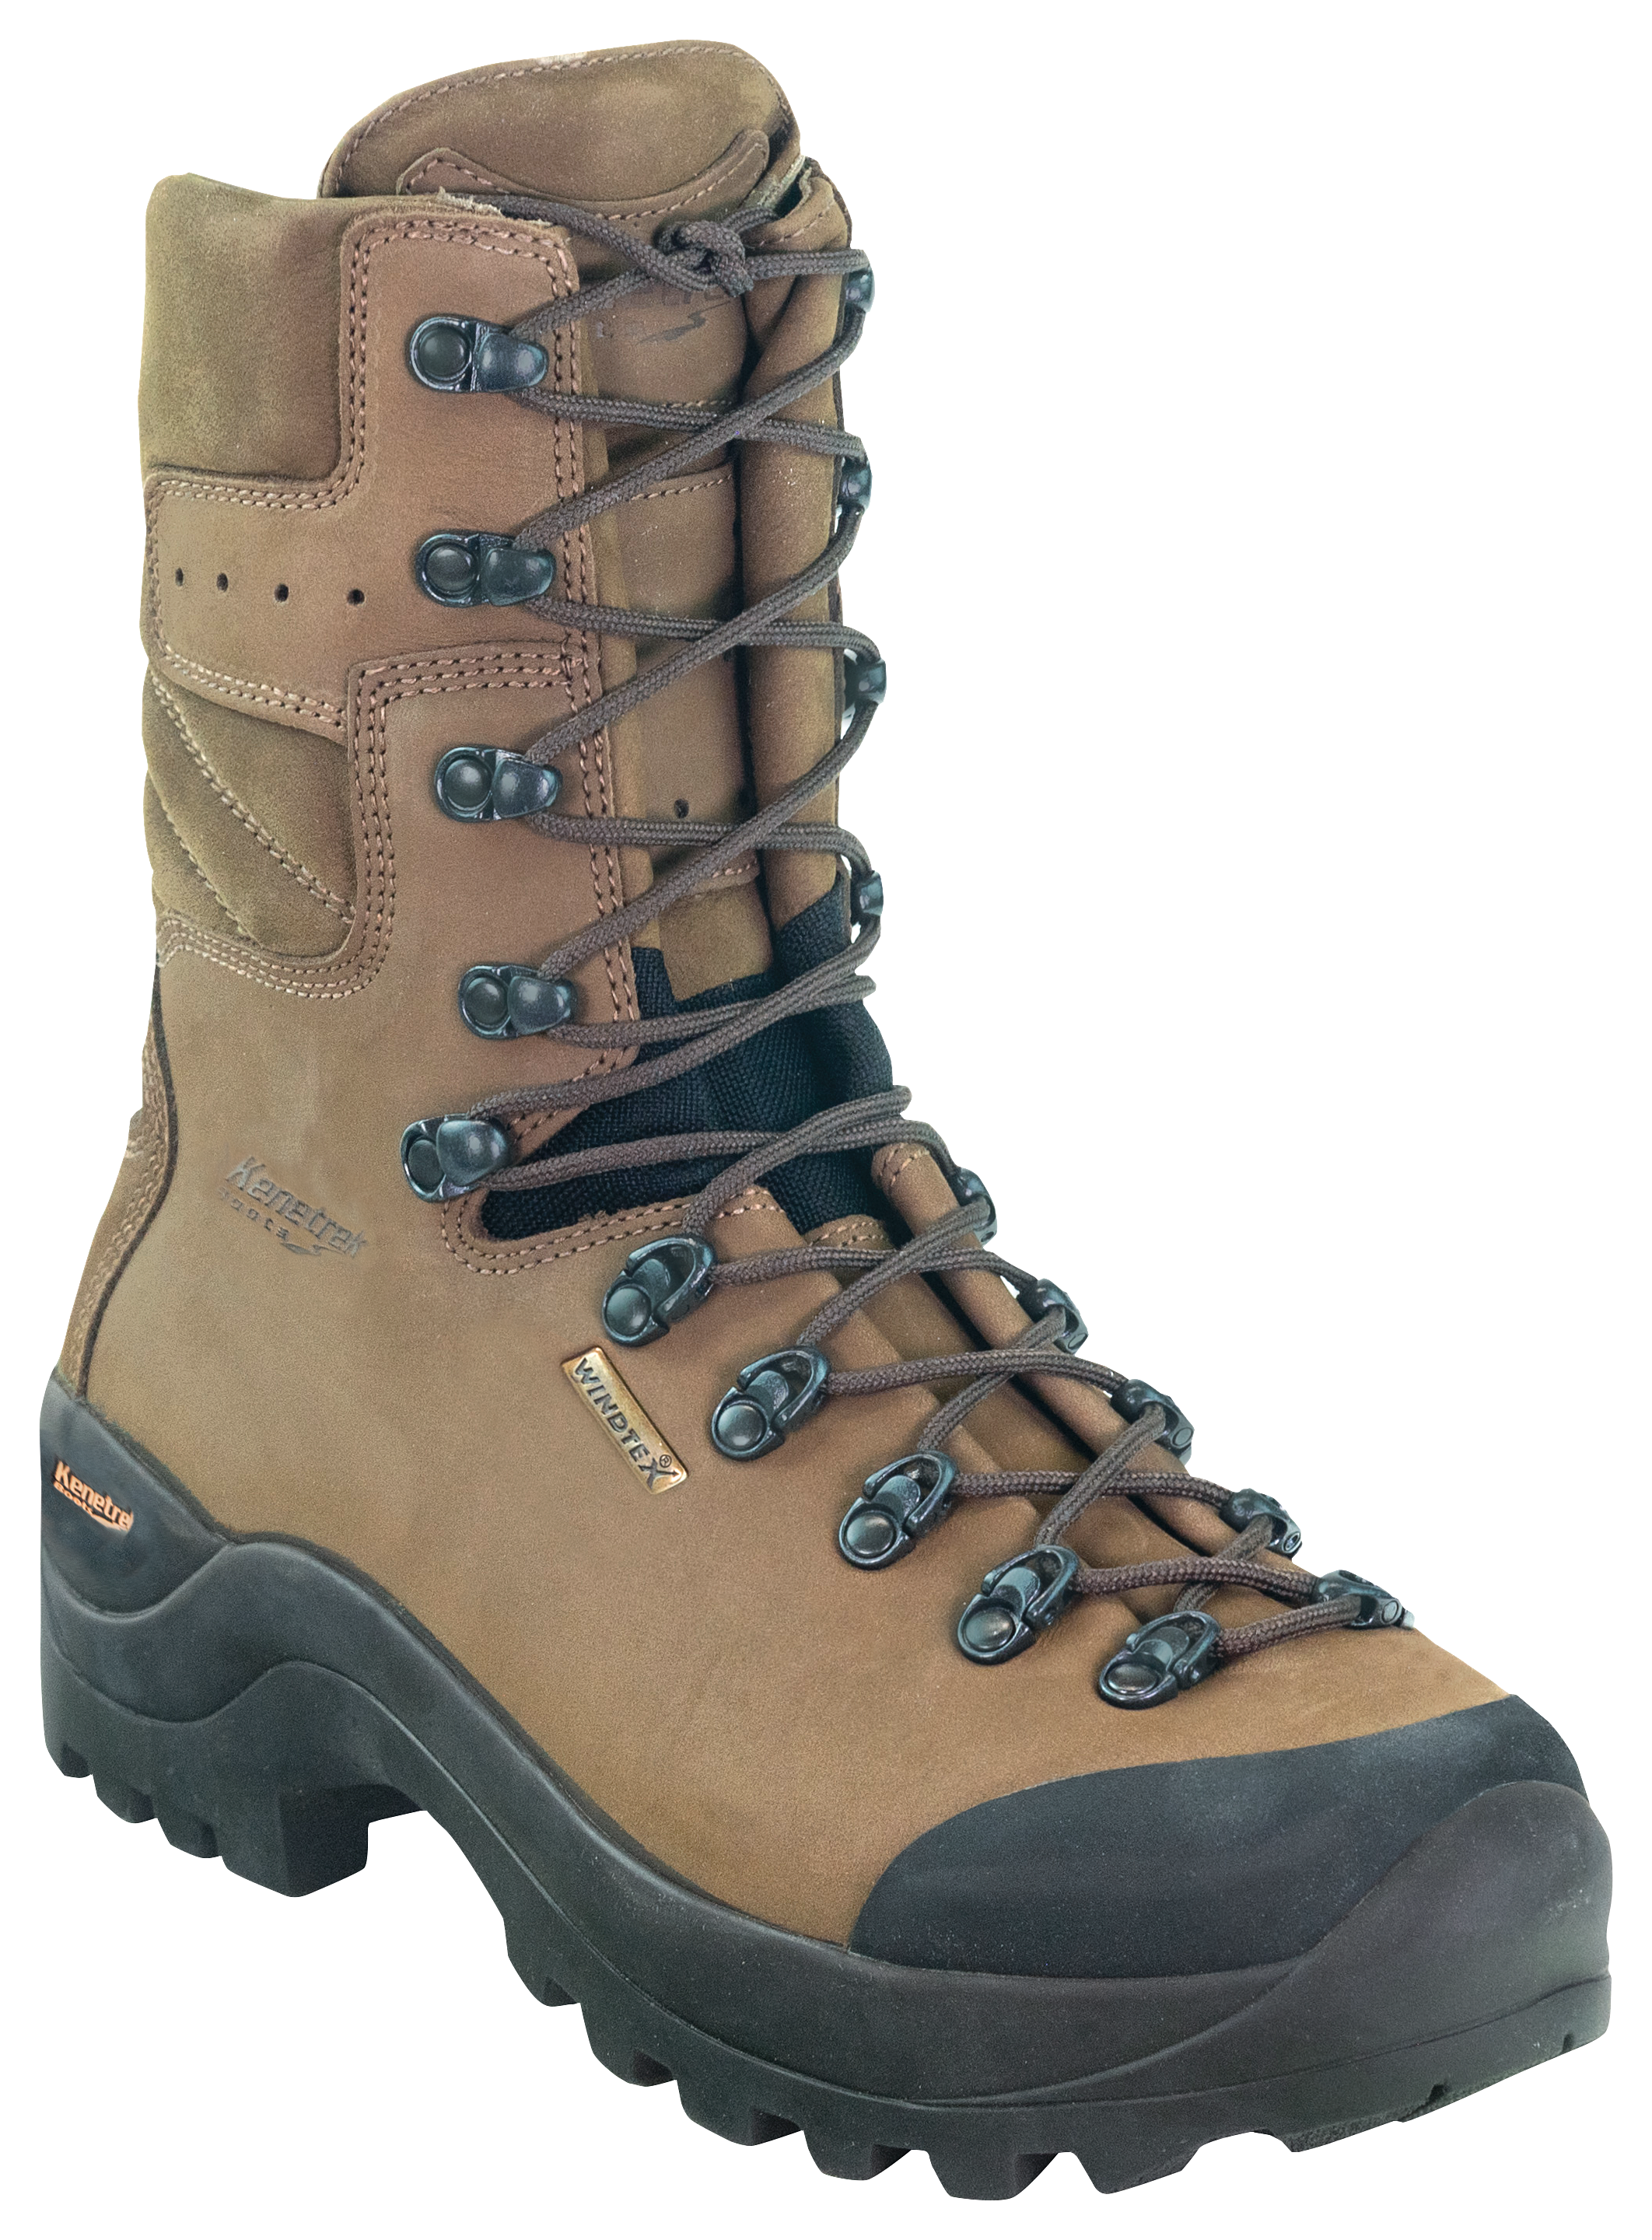 Kenetrek Mountain Guide Waterproof Hunting Boots for Men - Brown - 9.5M